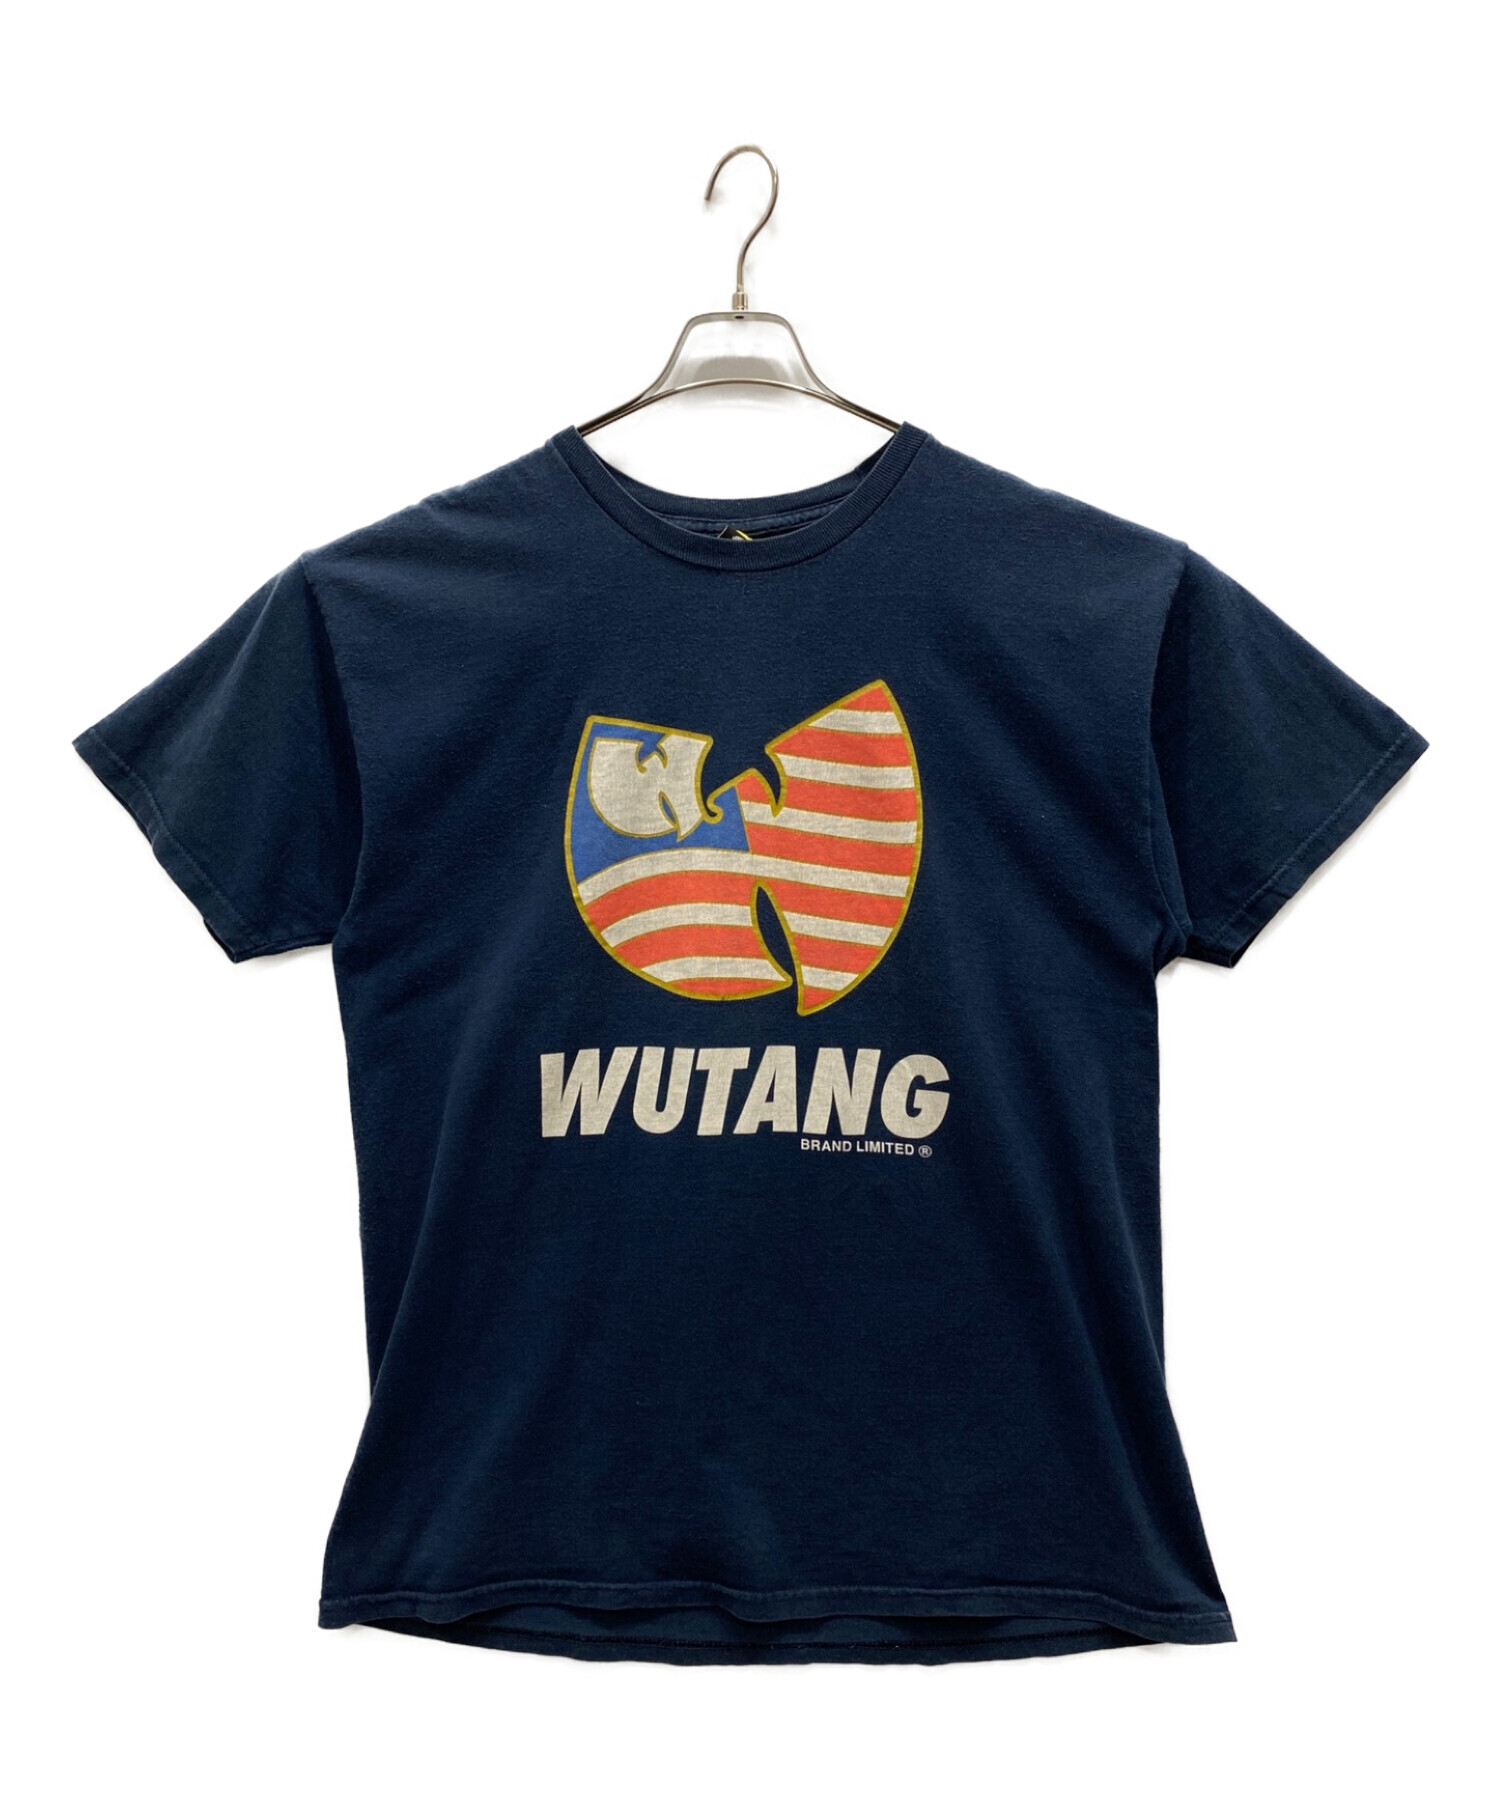 wu-tang clan (ウータンクラン) ヴィンテージプリントTシャツ ネイビー サイズ:L